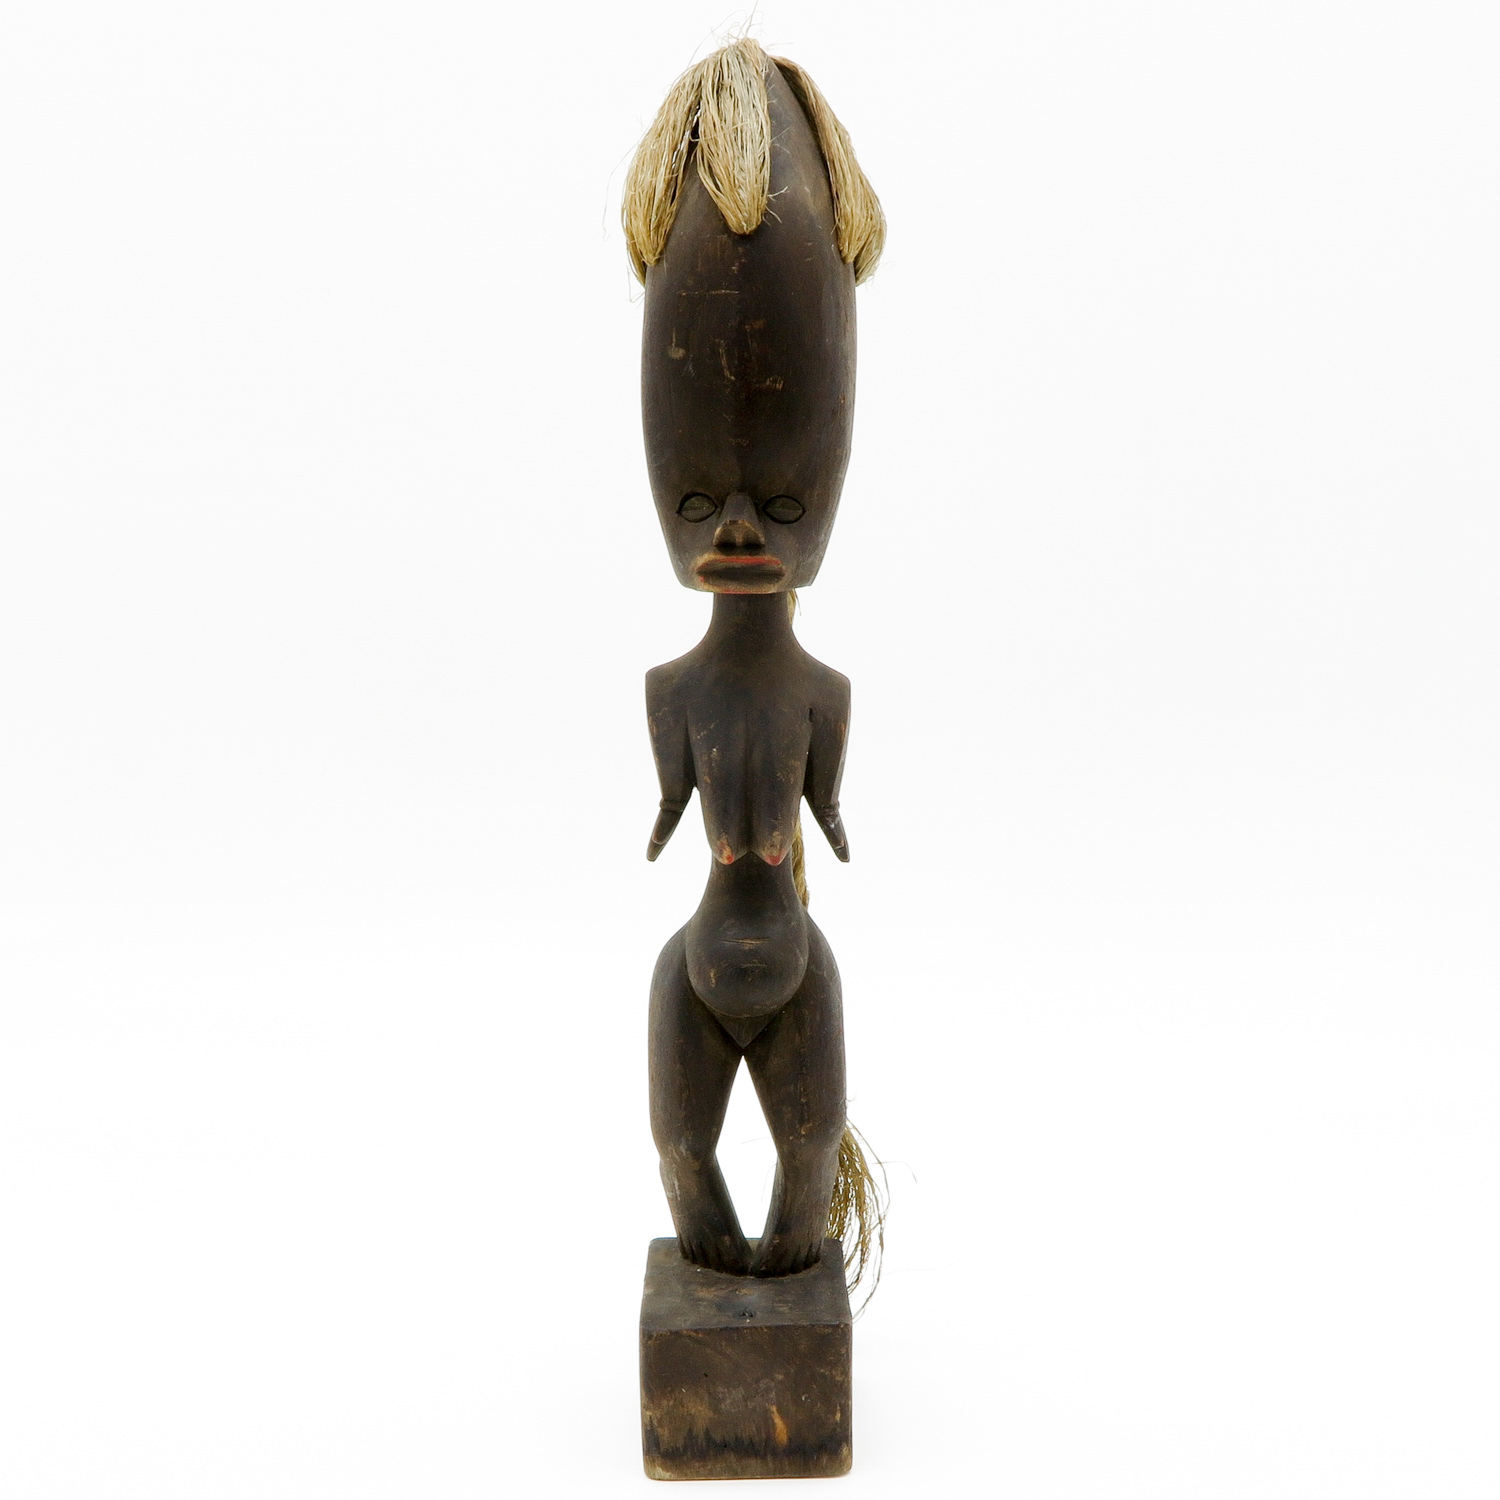 Ethnographic Carved Wood Sculpture